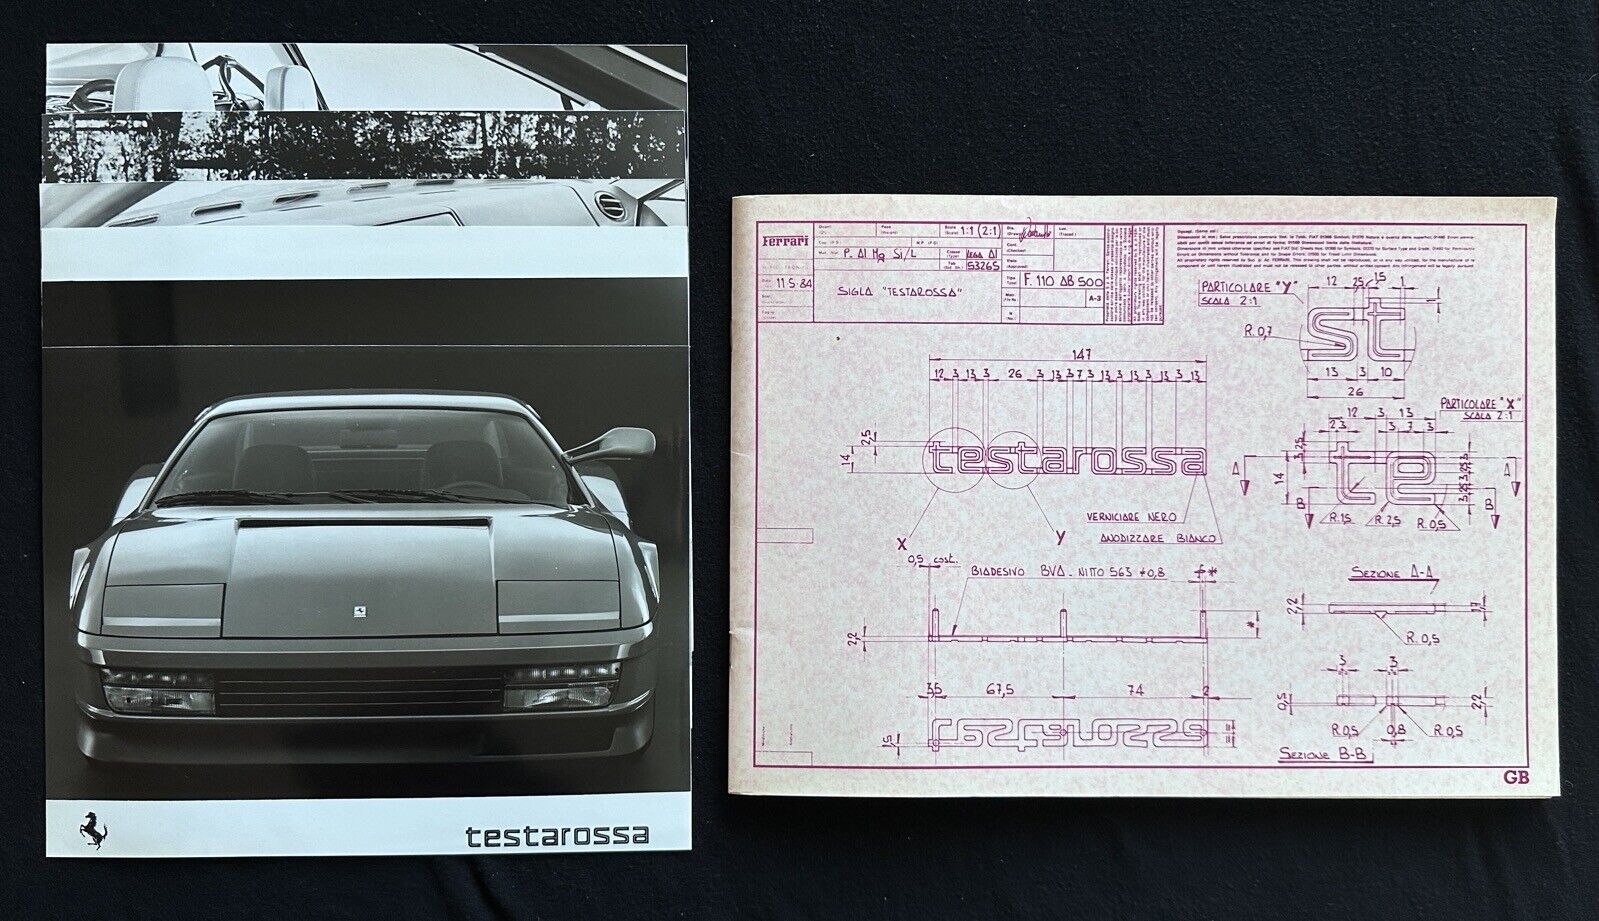 1984 Ferrari Testarossa Press Kit English 324/84 5 Photos Prospekt Brochure